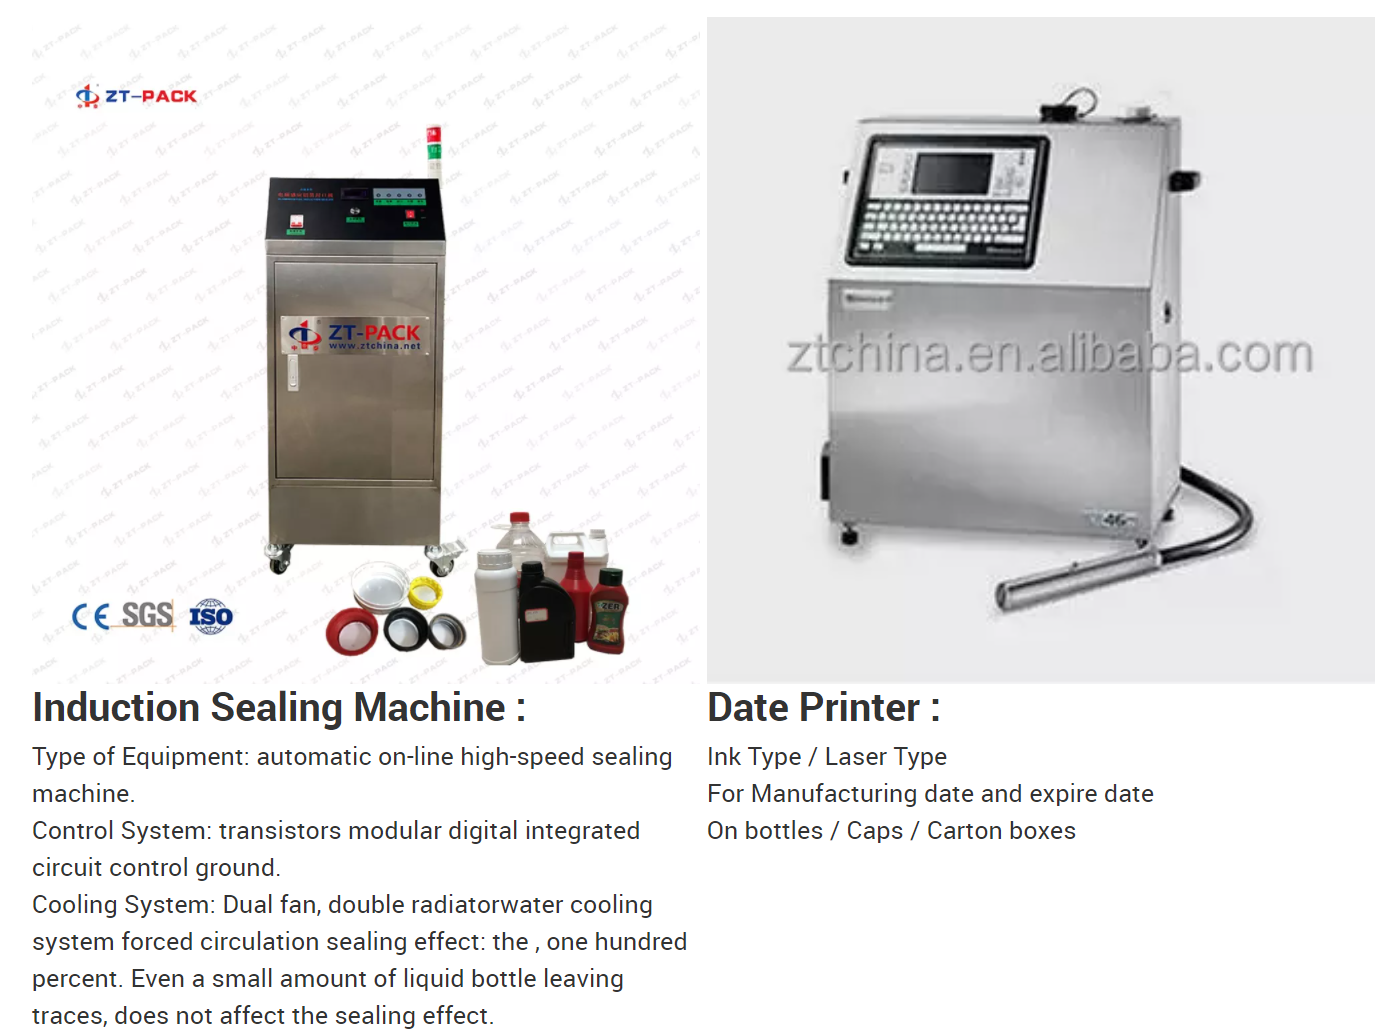 induction sealer & date printer